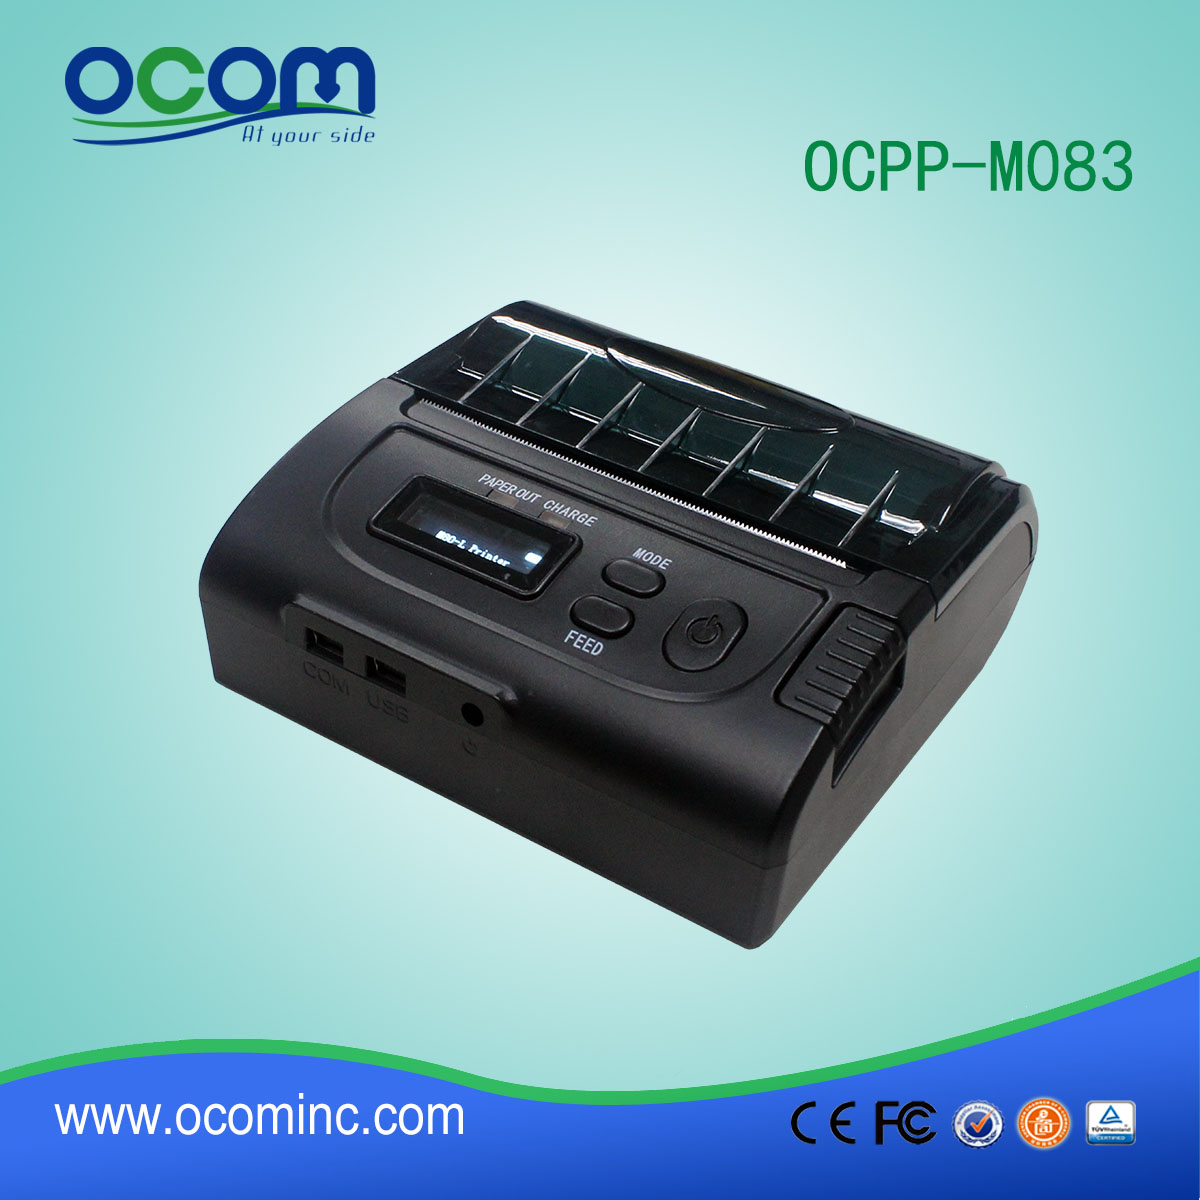 Thermique Direct OCPP-M083 android imprimante portable usb imprimante thermique